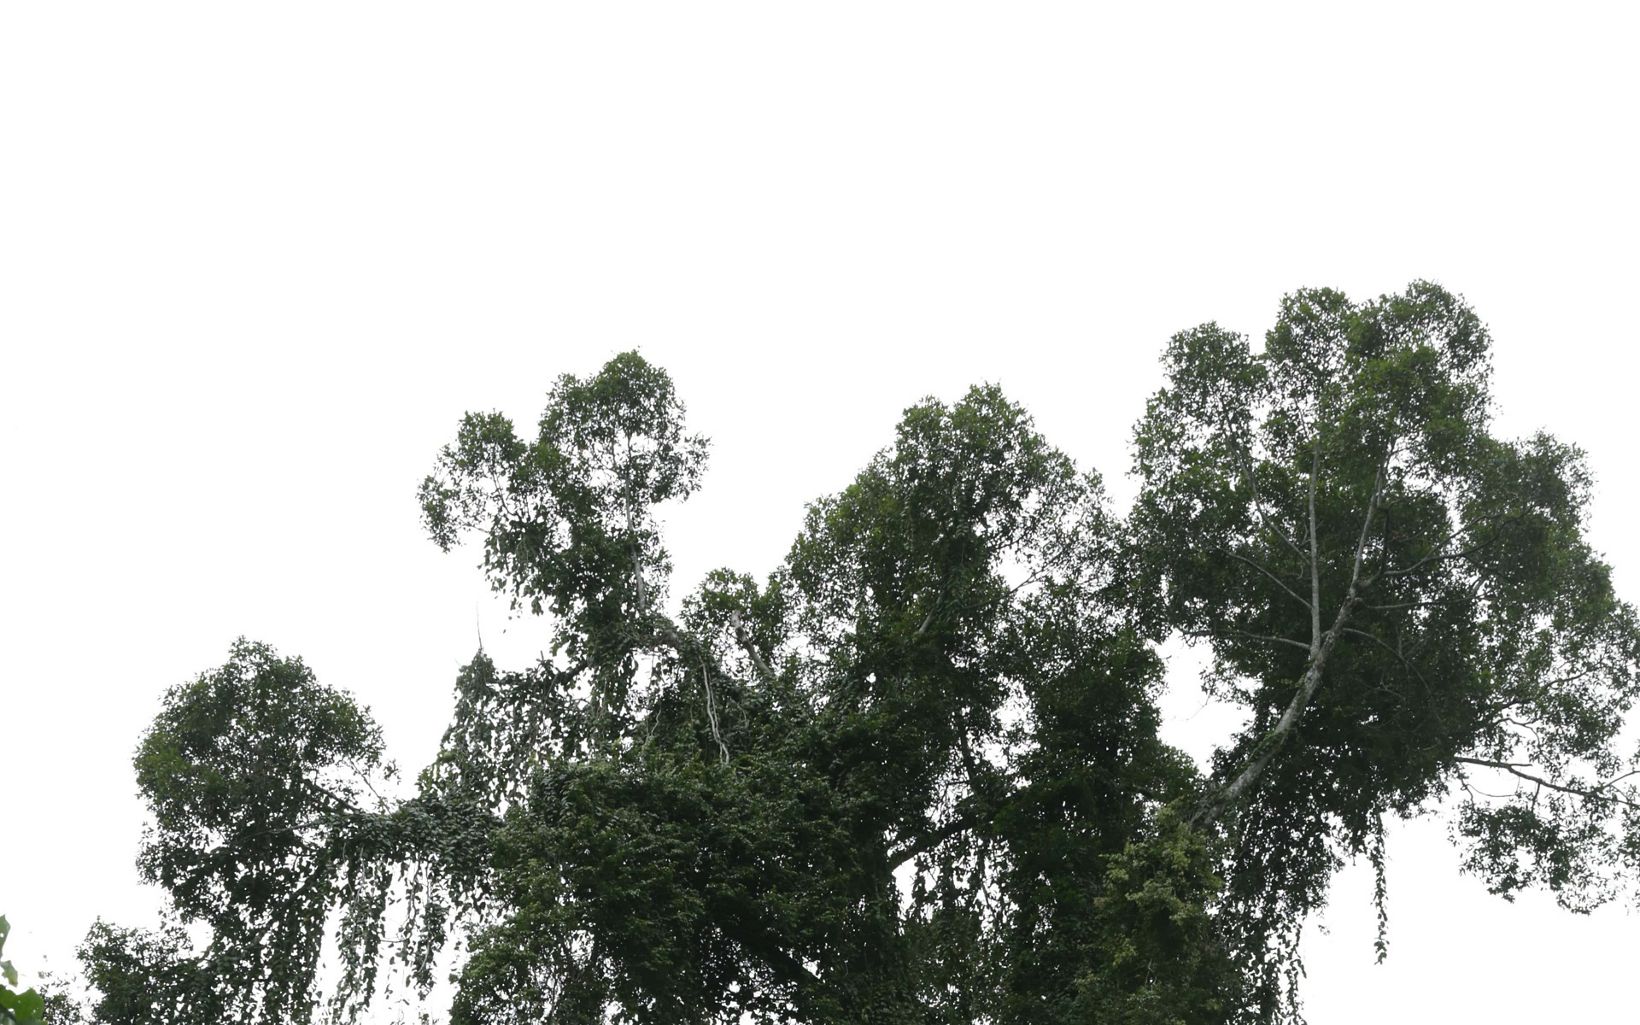 
                
                  Tajuk rindang Kanopi umumnya berada di ketinggian 30 meter di atas tanah, terdiri dari cabang dan daun pohon hutan hujan yang tumpang tindih.
                  © YKAN
                
              